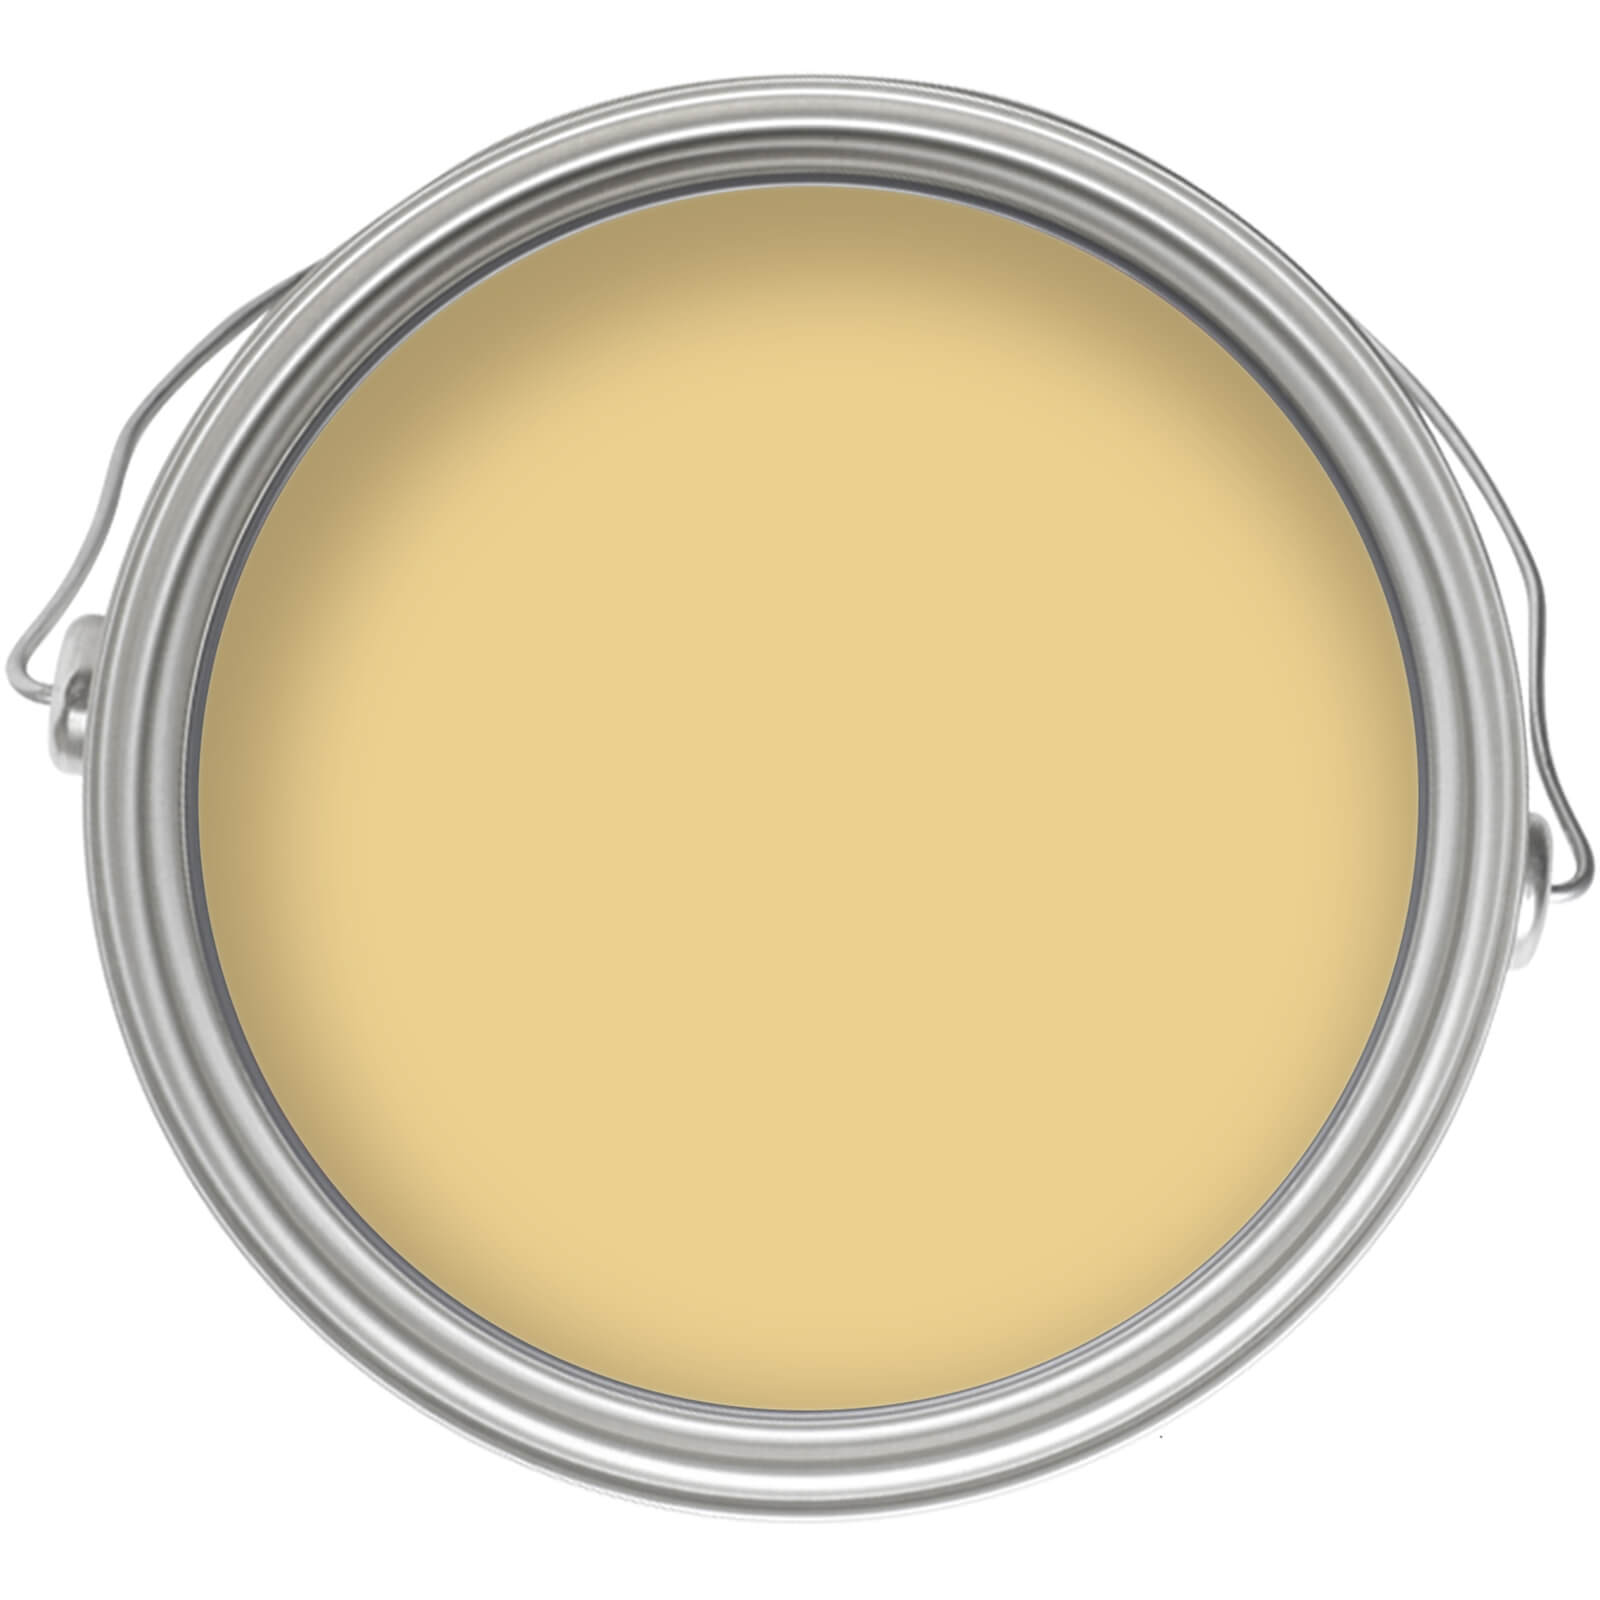 Homebase Silk Emulsion Paint Soft Mustard - 2.5L